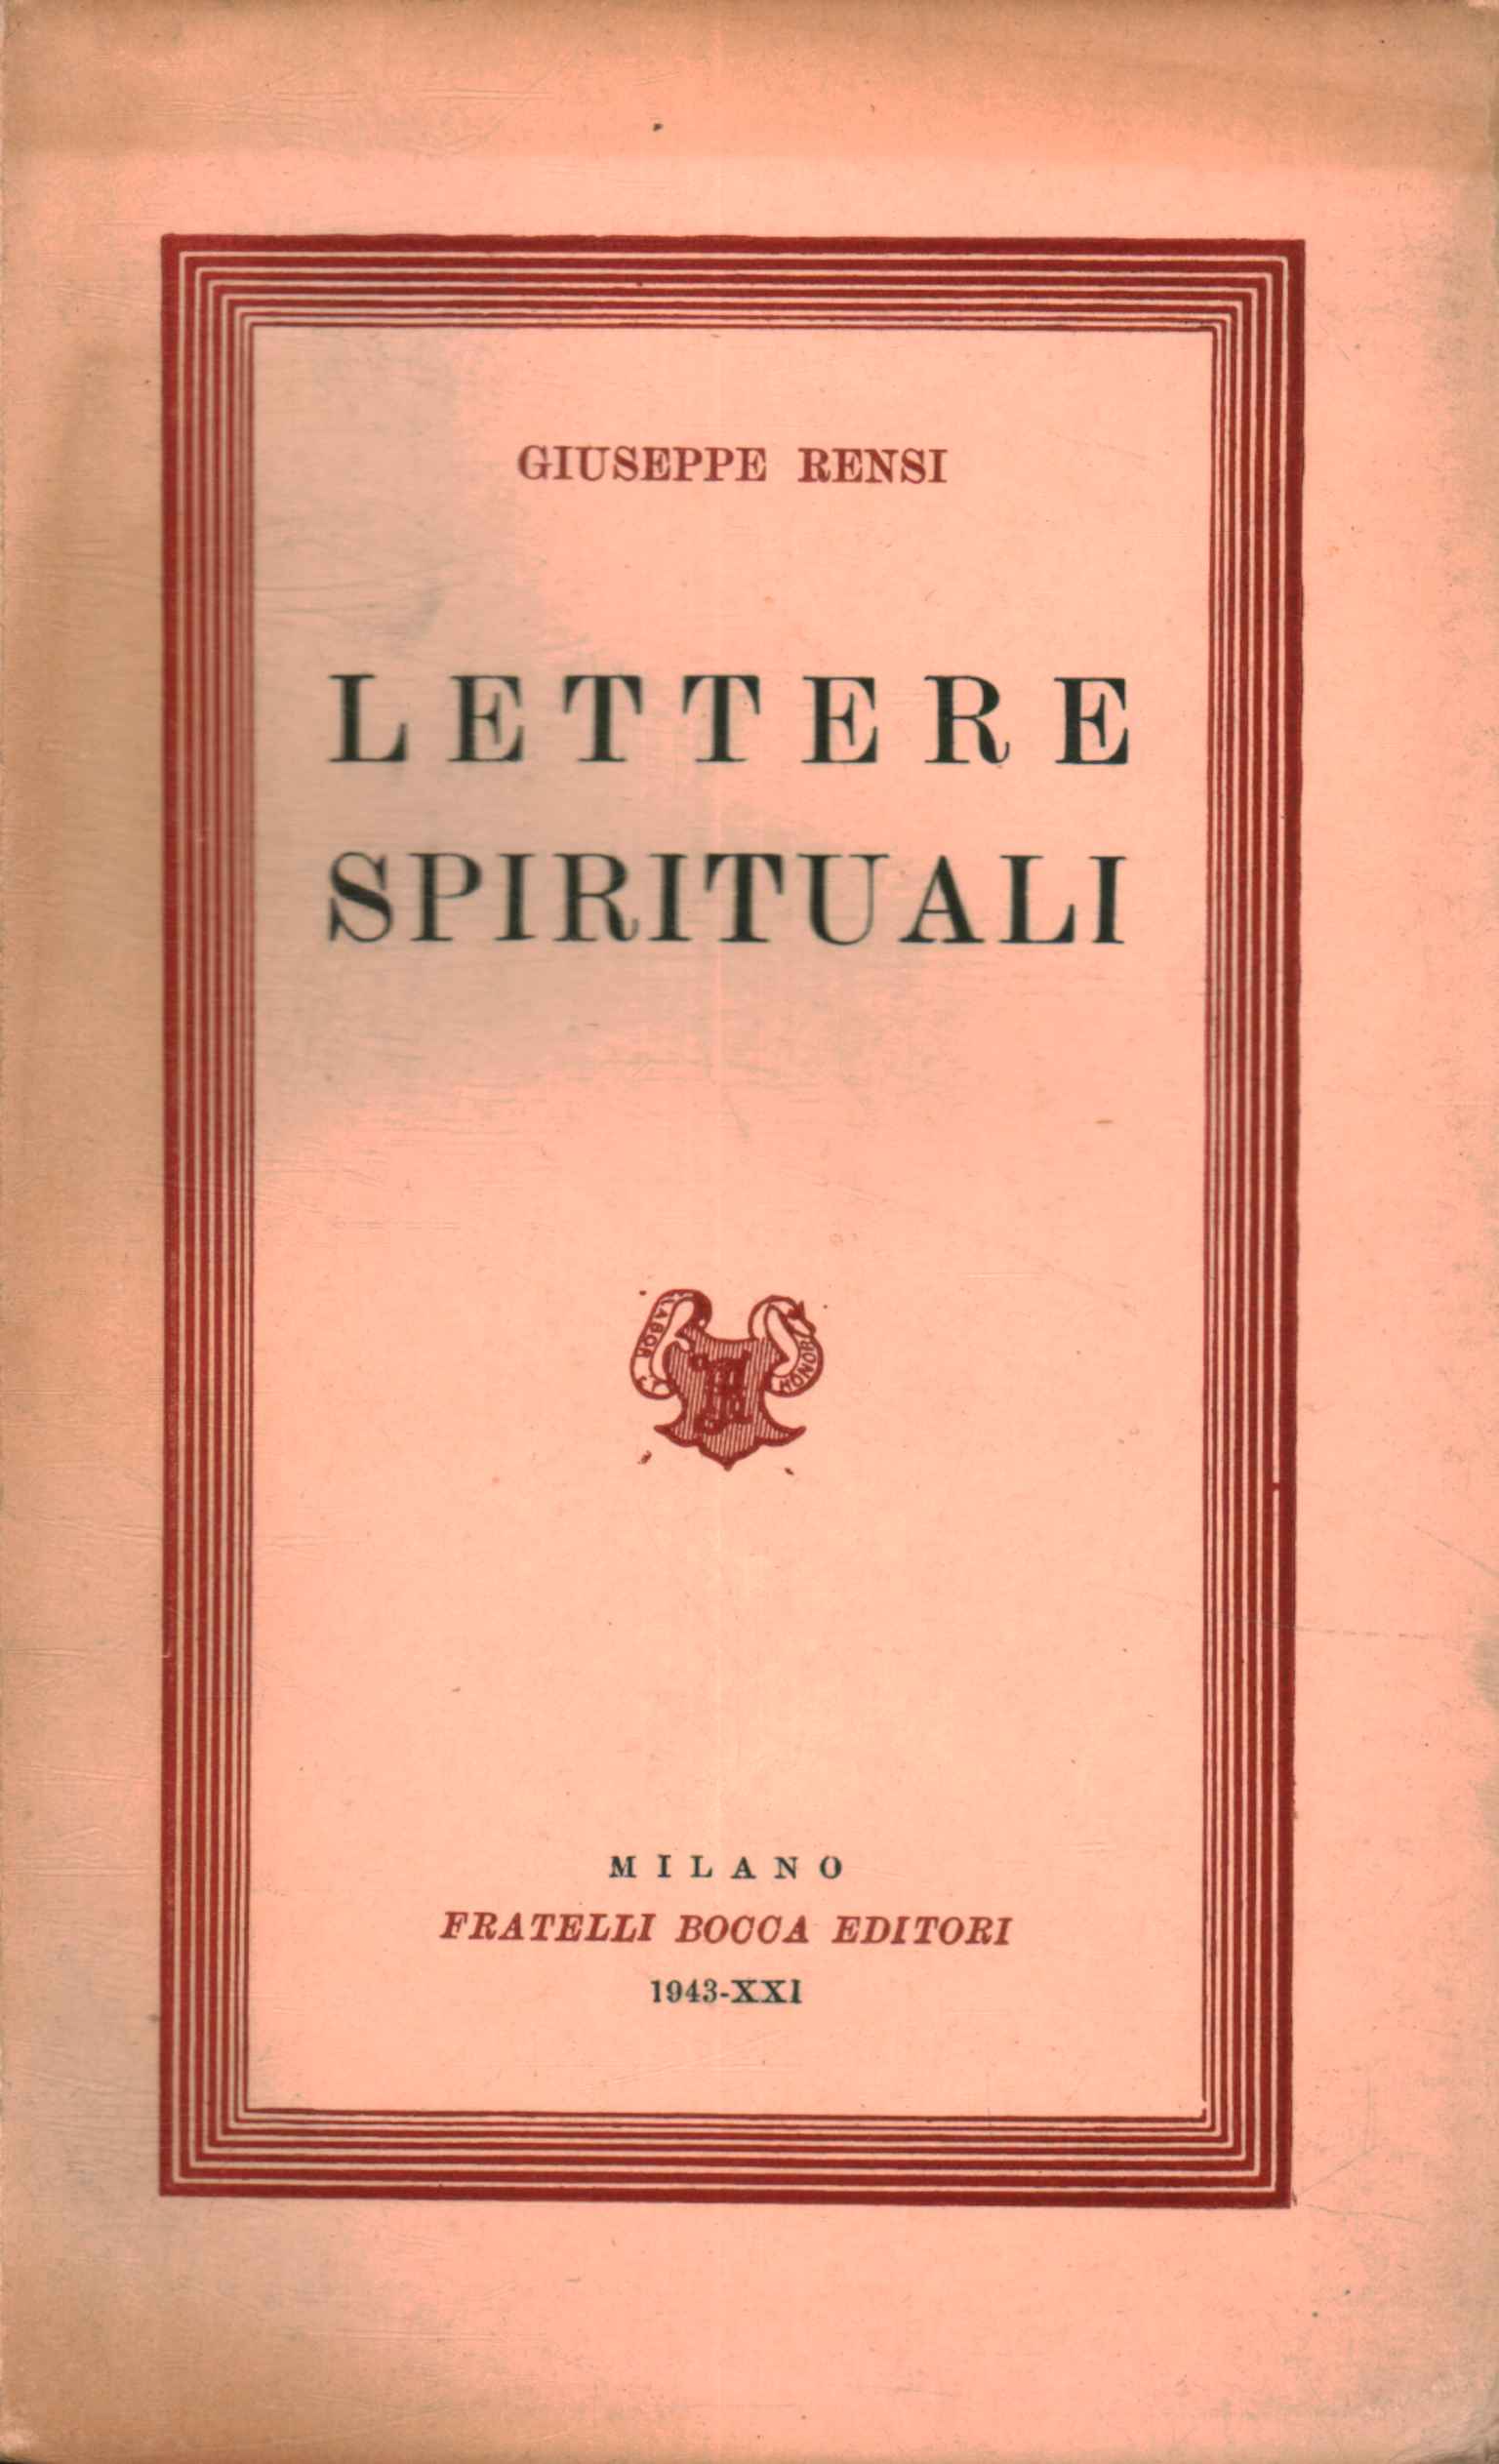 Spiritual letters